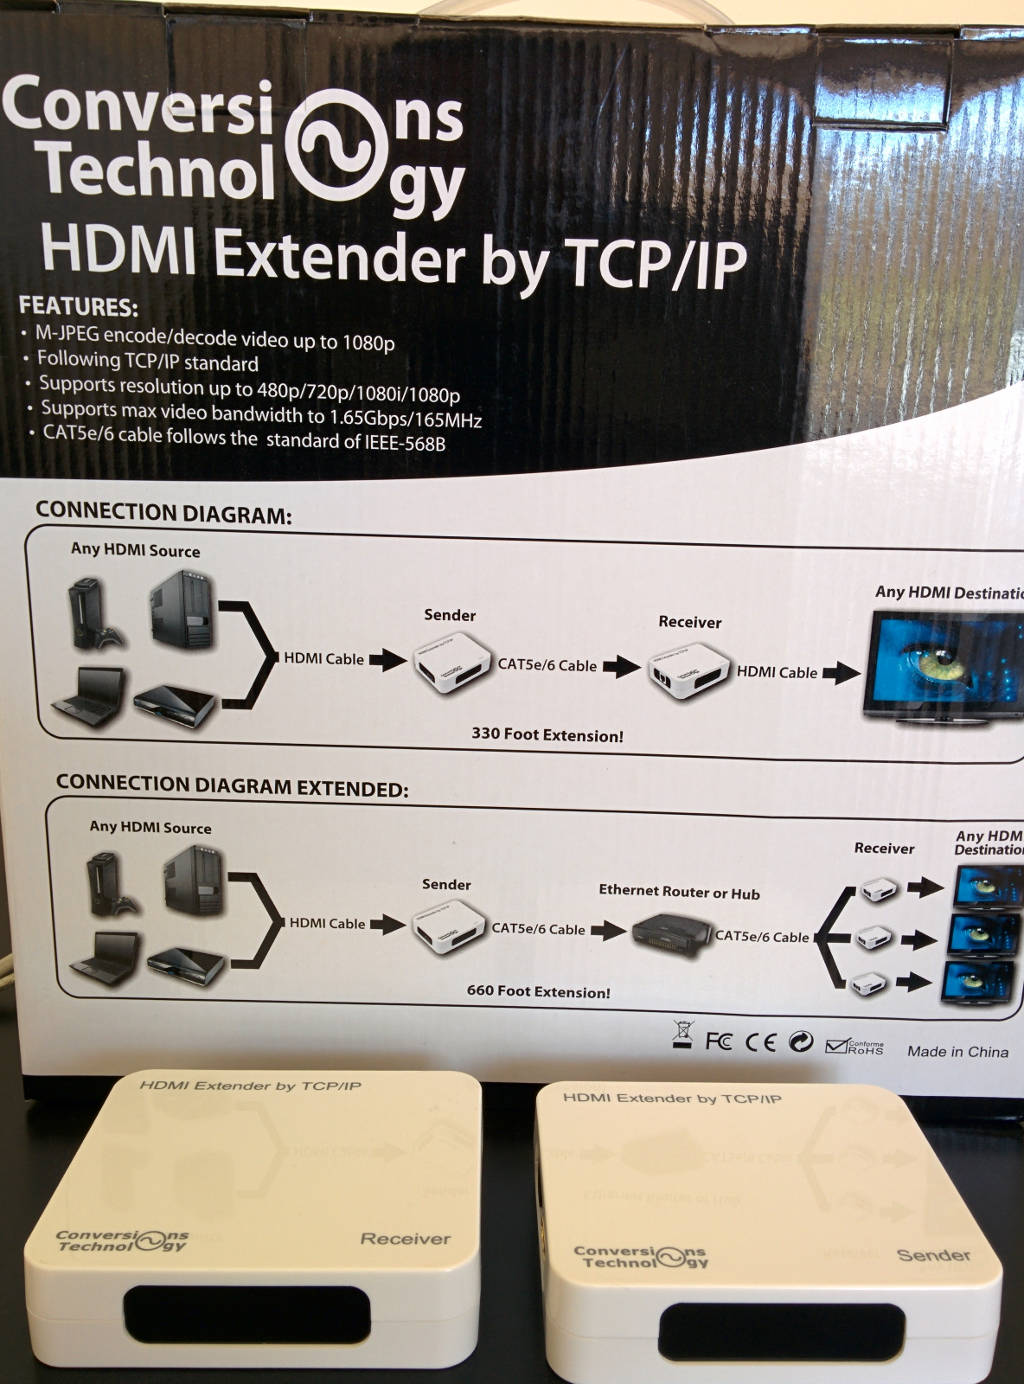 HDMI-over-IP diagram